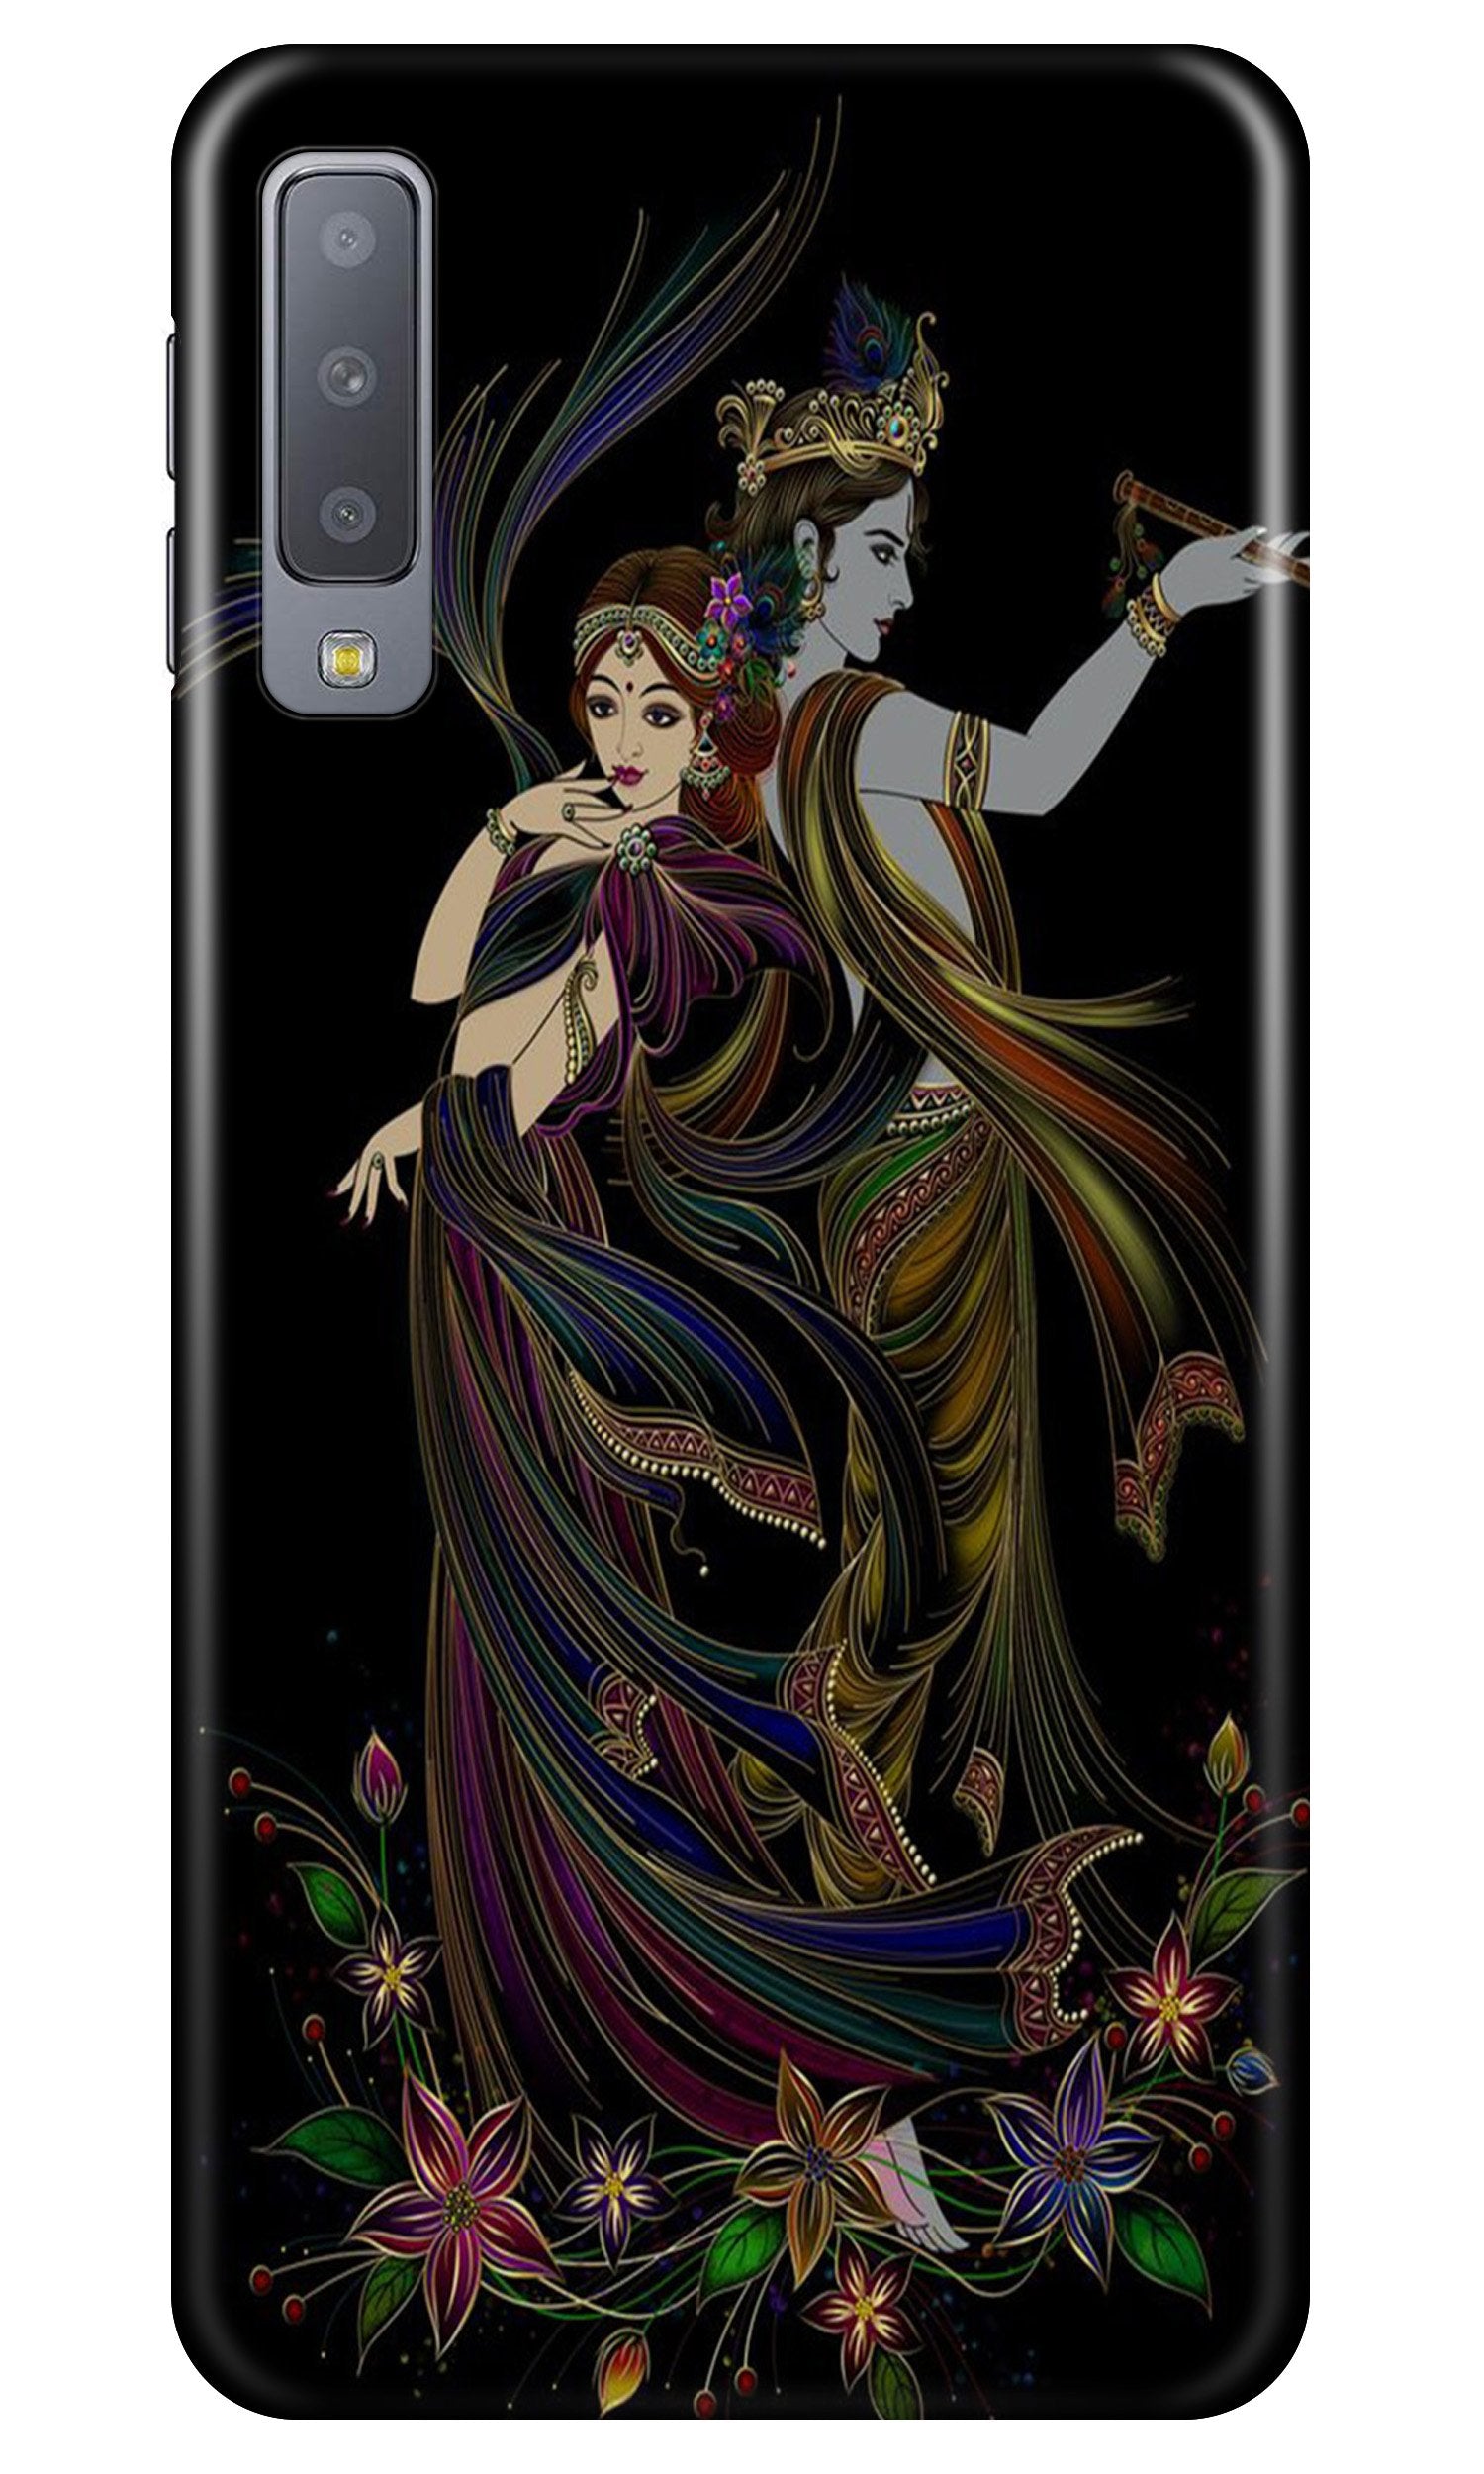 Radha Krishna Case for Samung Galaxy A70s (Design No. 290)